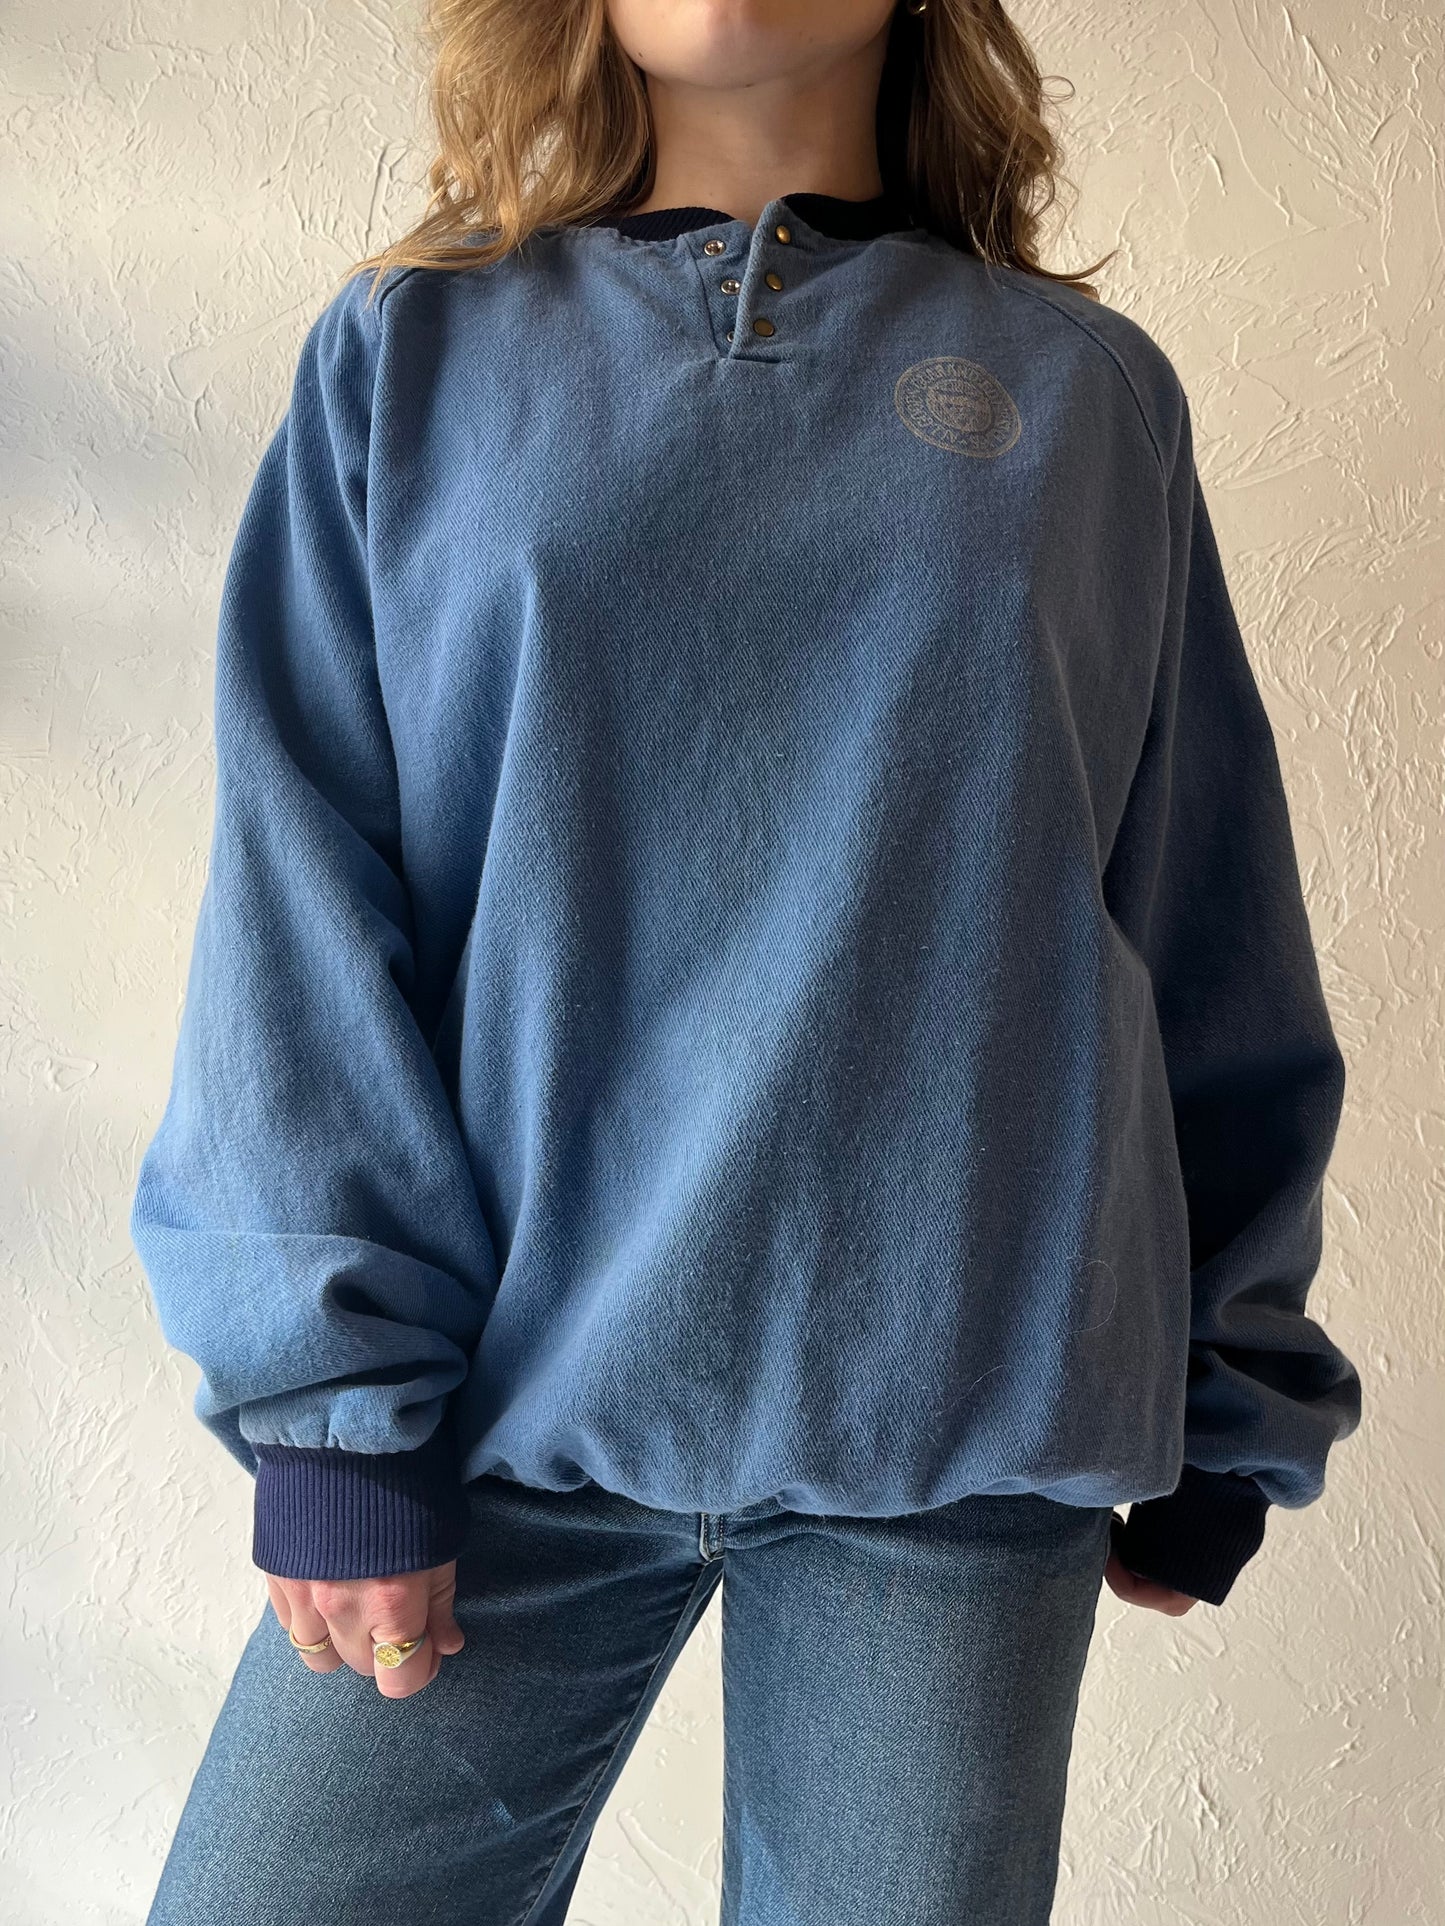 90s 'Osh Kosh' Blue Pullover Sweatshirt / Medium